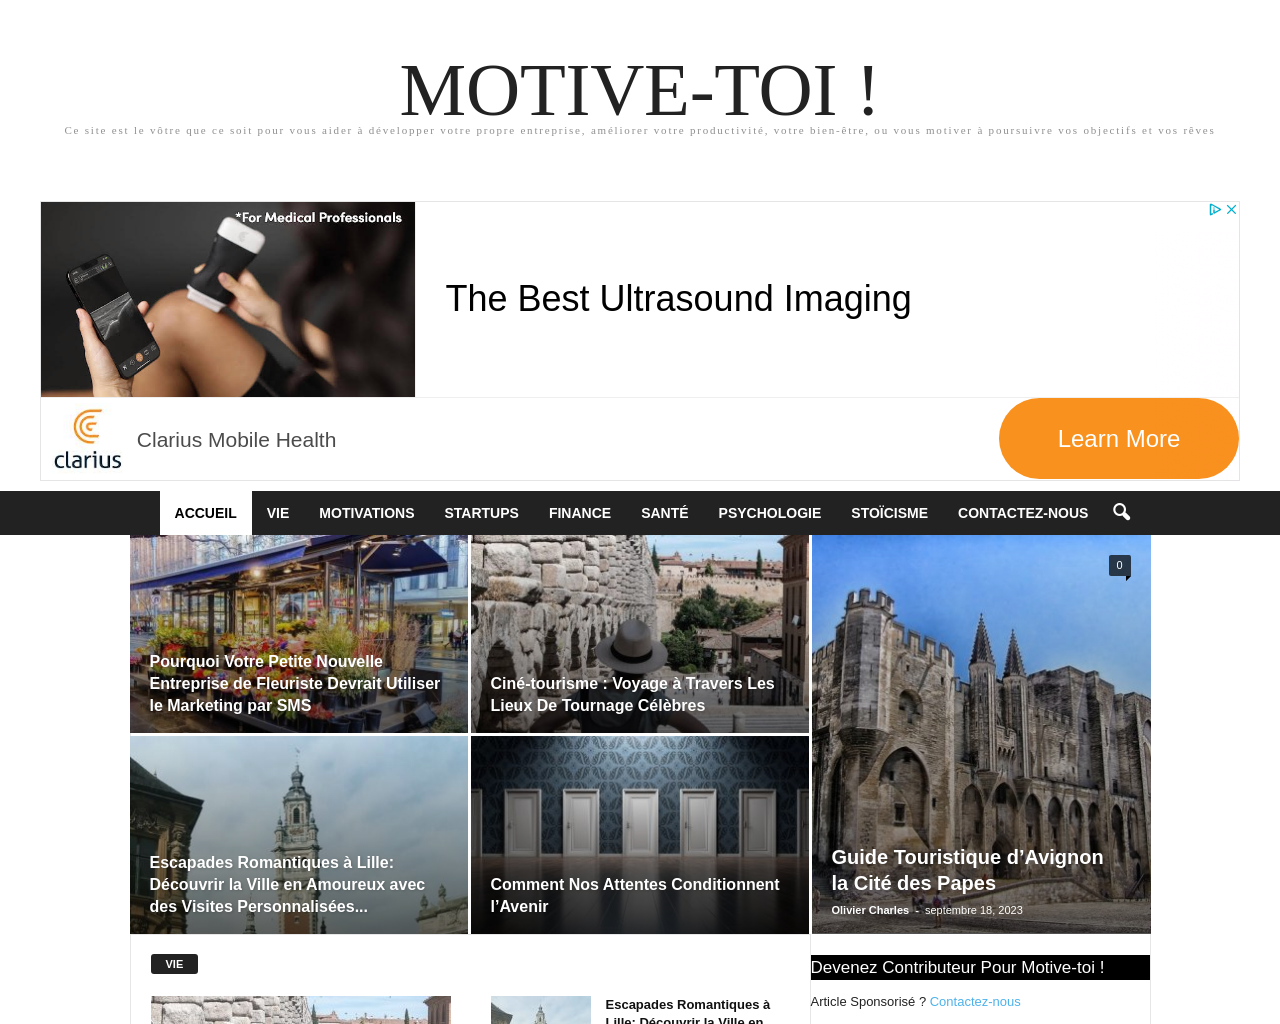 www.motive-toi.com